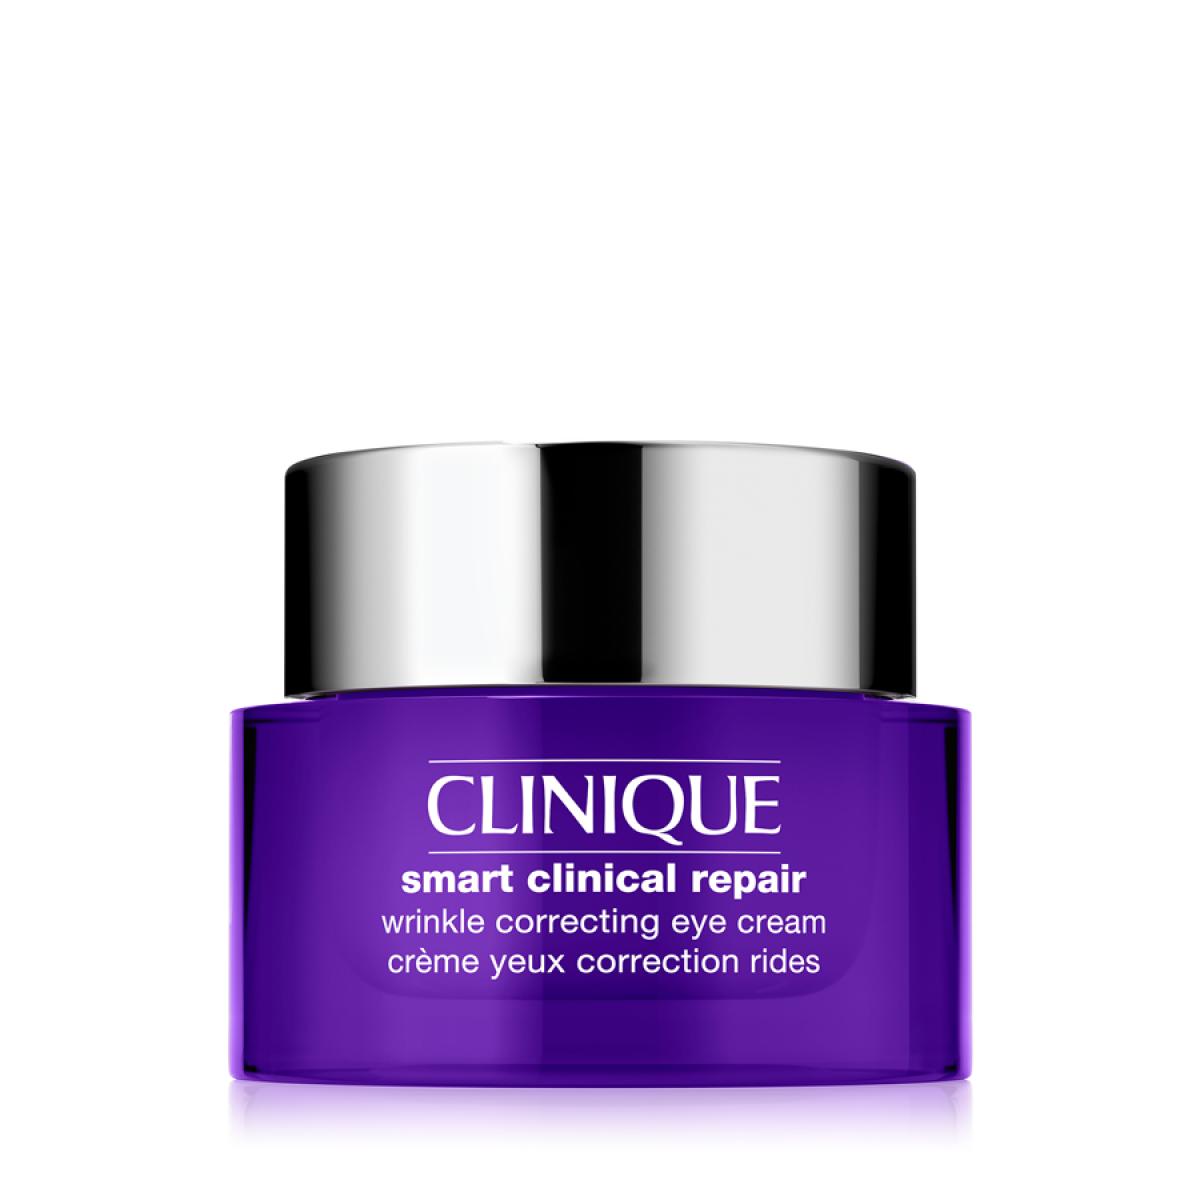 Smart Clinical Repair Wrinkle Correcting Eye cream de Clinique 